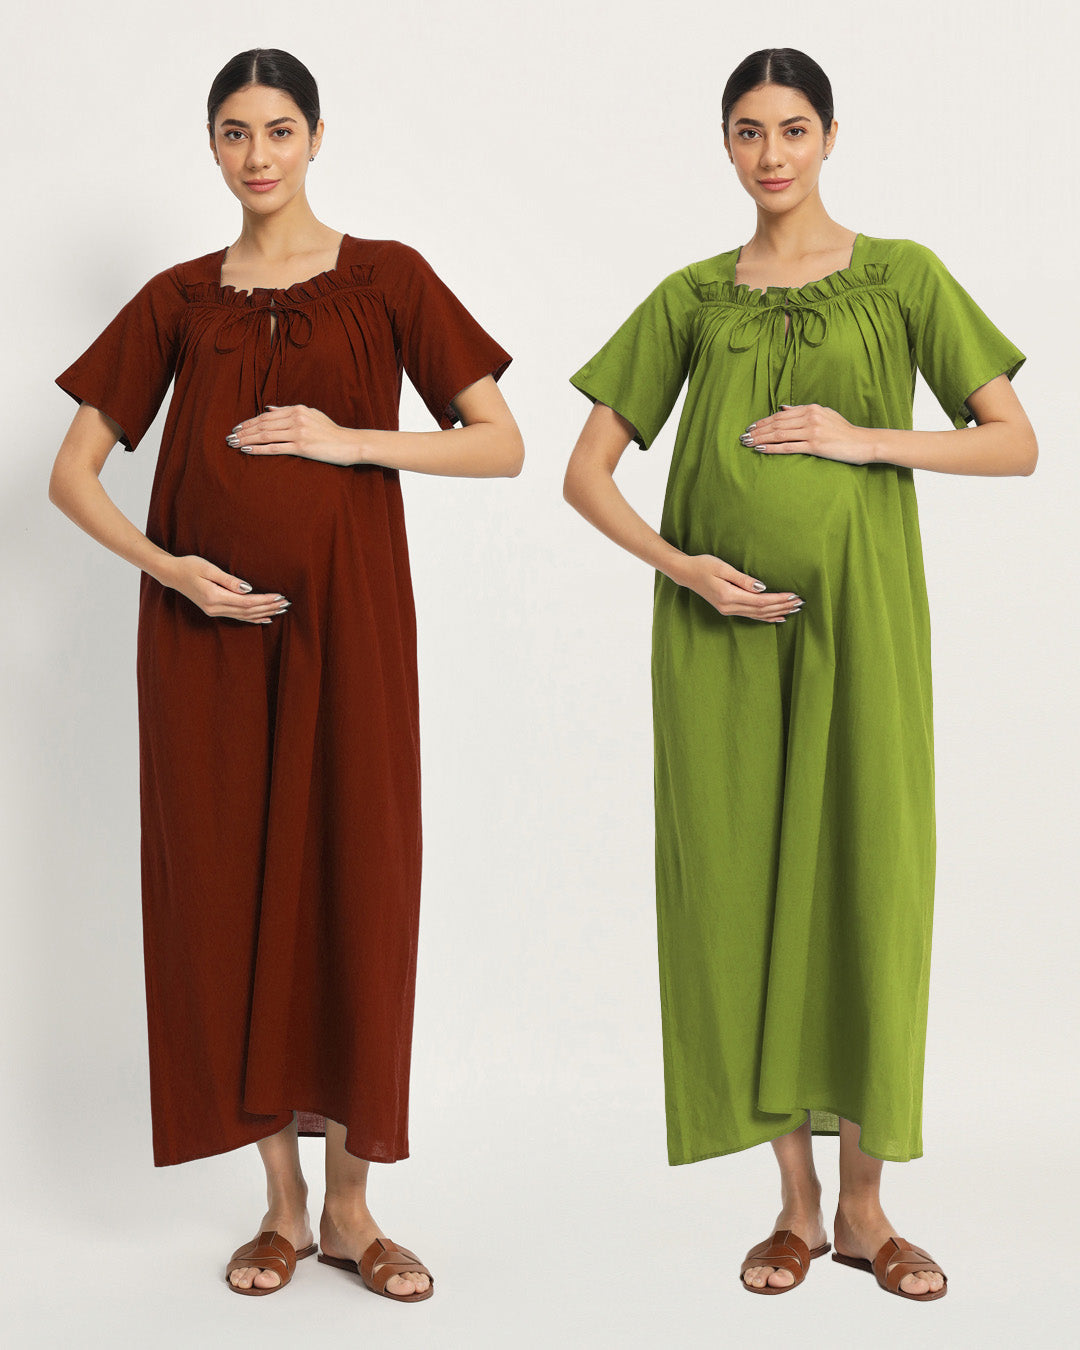 Combo: Russet Red & Sage Green Nurture N' Shine Maternity & Nursing Dress